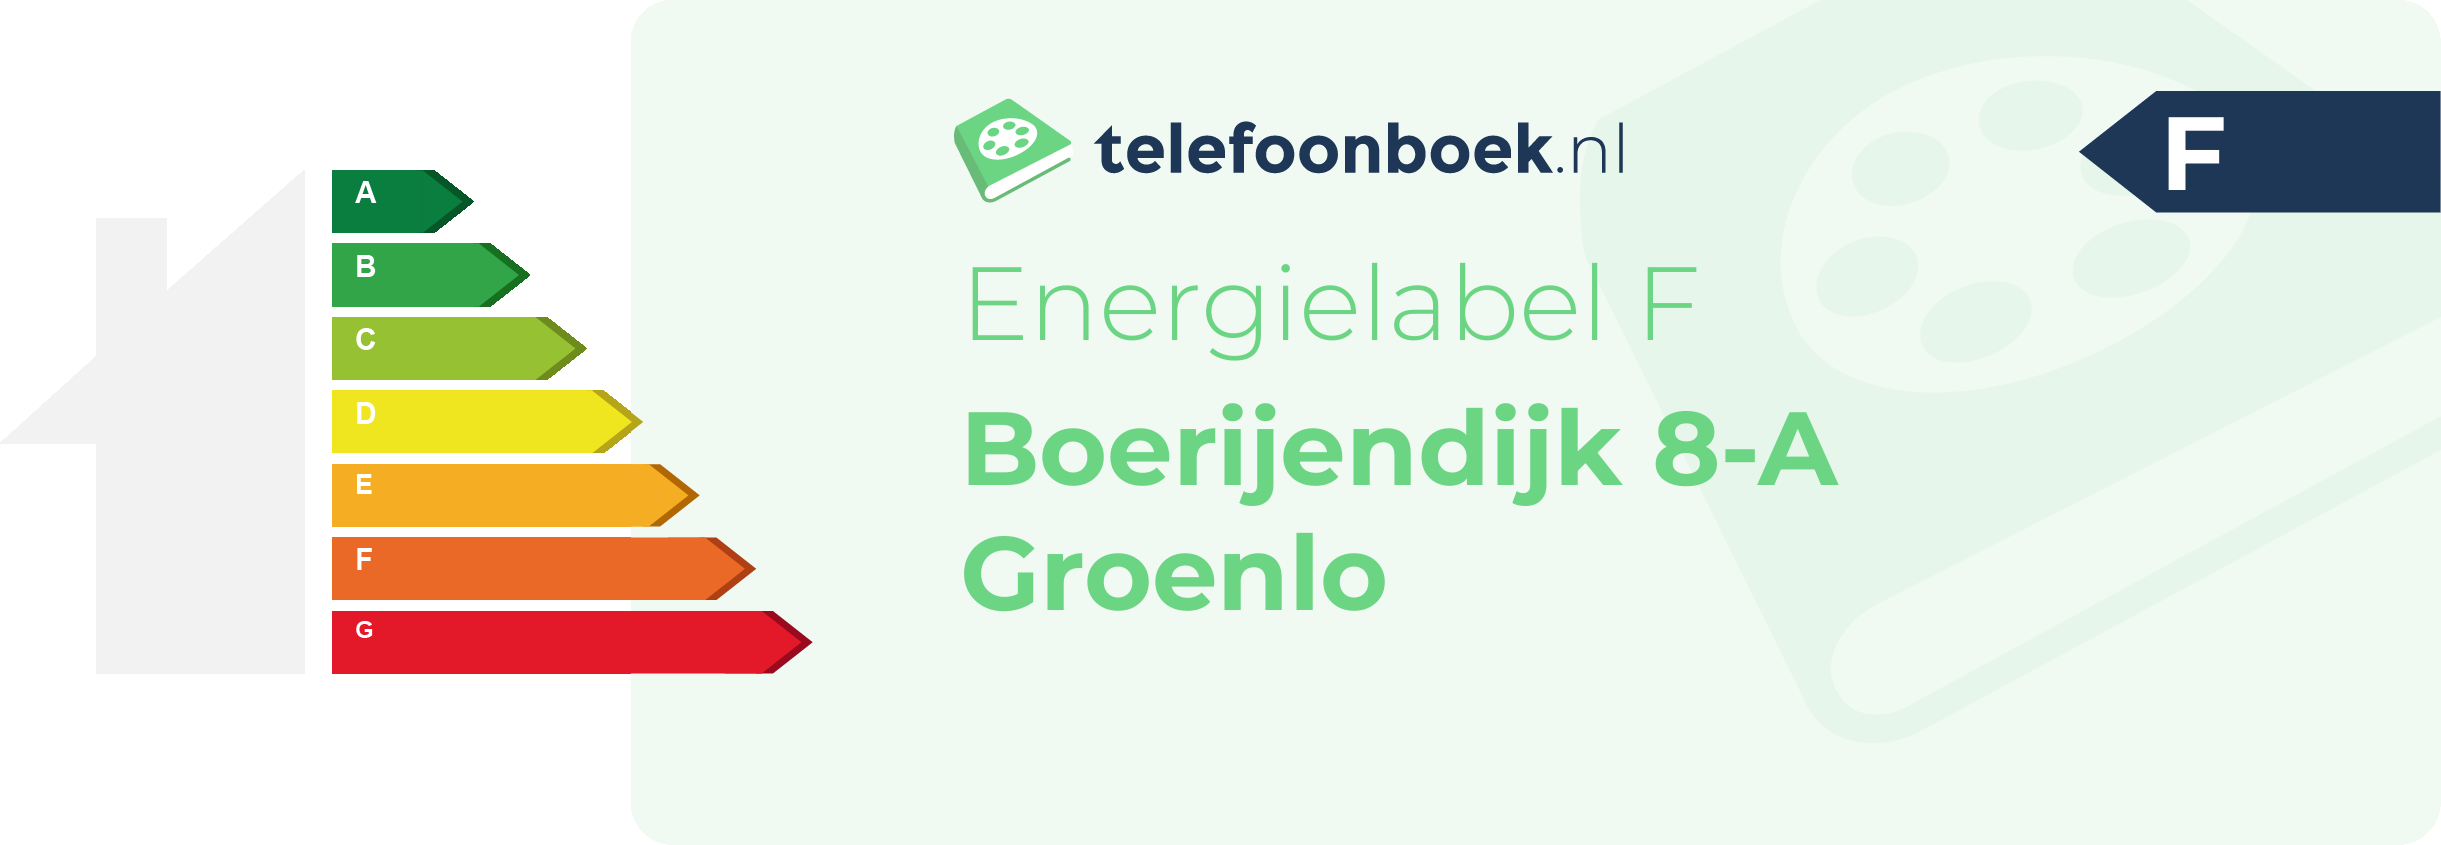 Energielabel Boerijendijk 8-A Groenlo